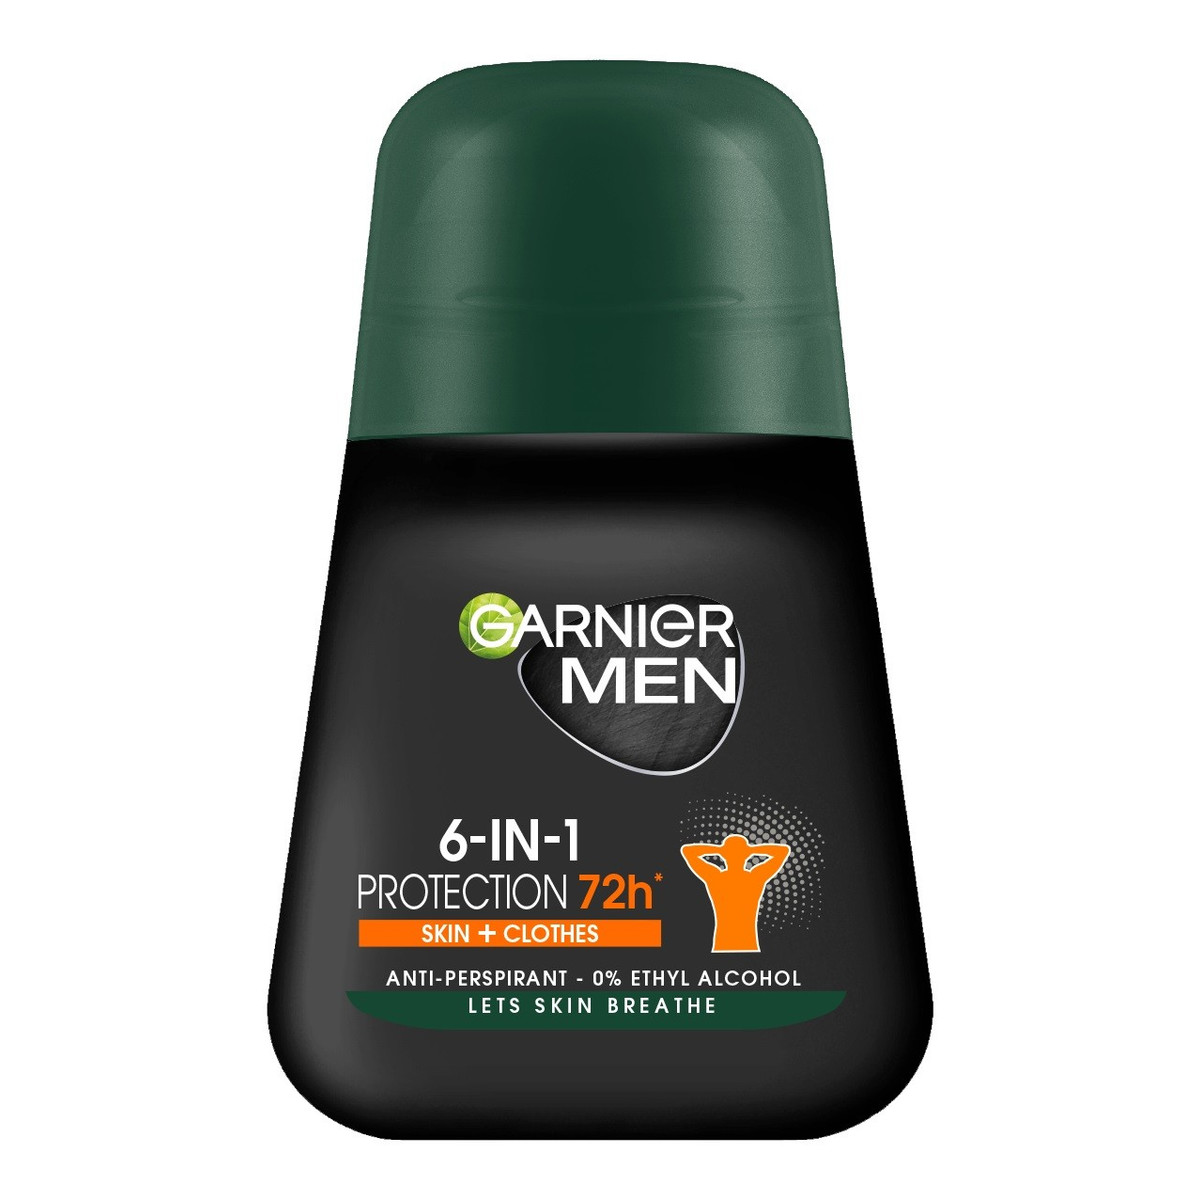 Garnier Men Dezodorant roll-on 6in1 Protection 72h Skin + Clothes 50ml